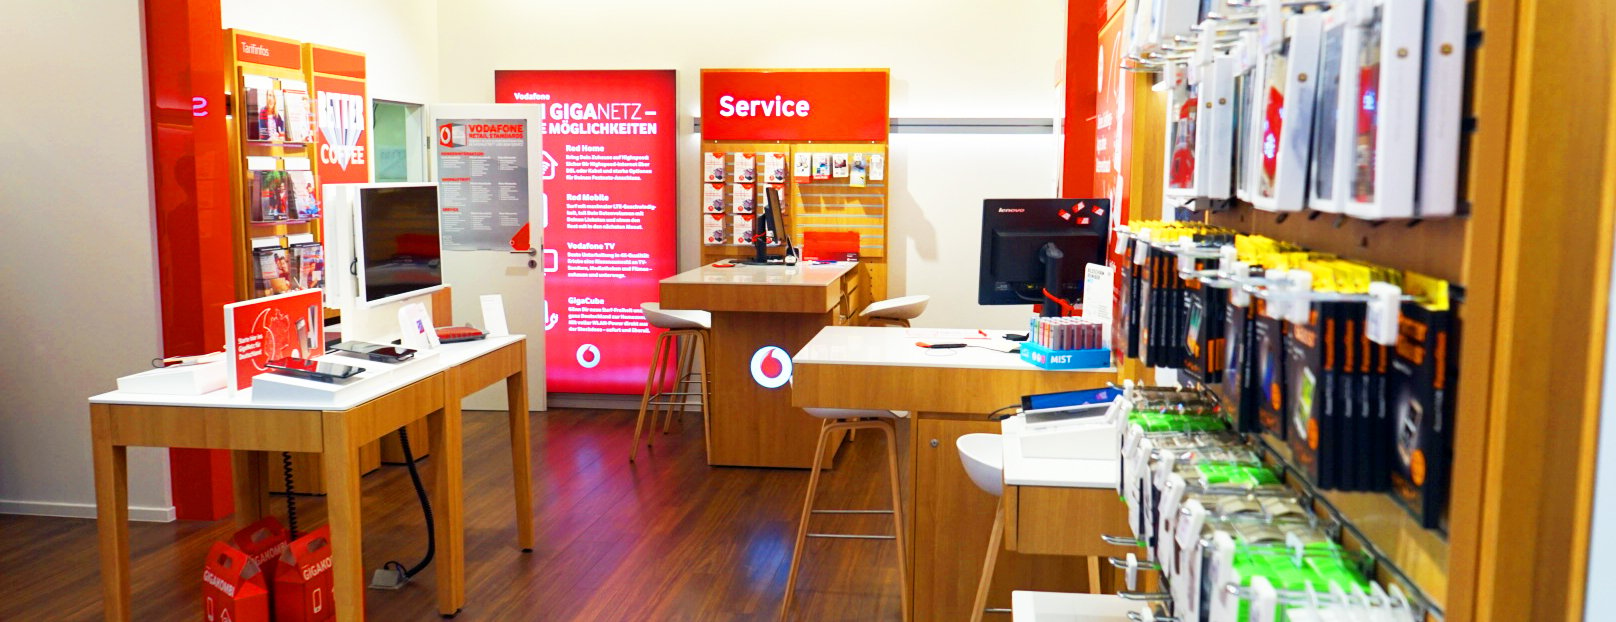 Vodafone-Shop in Rosenheim, Bahnhofstr. 19